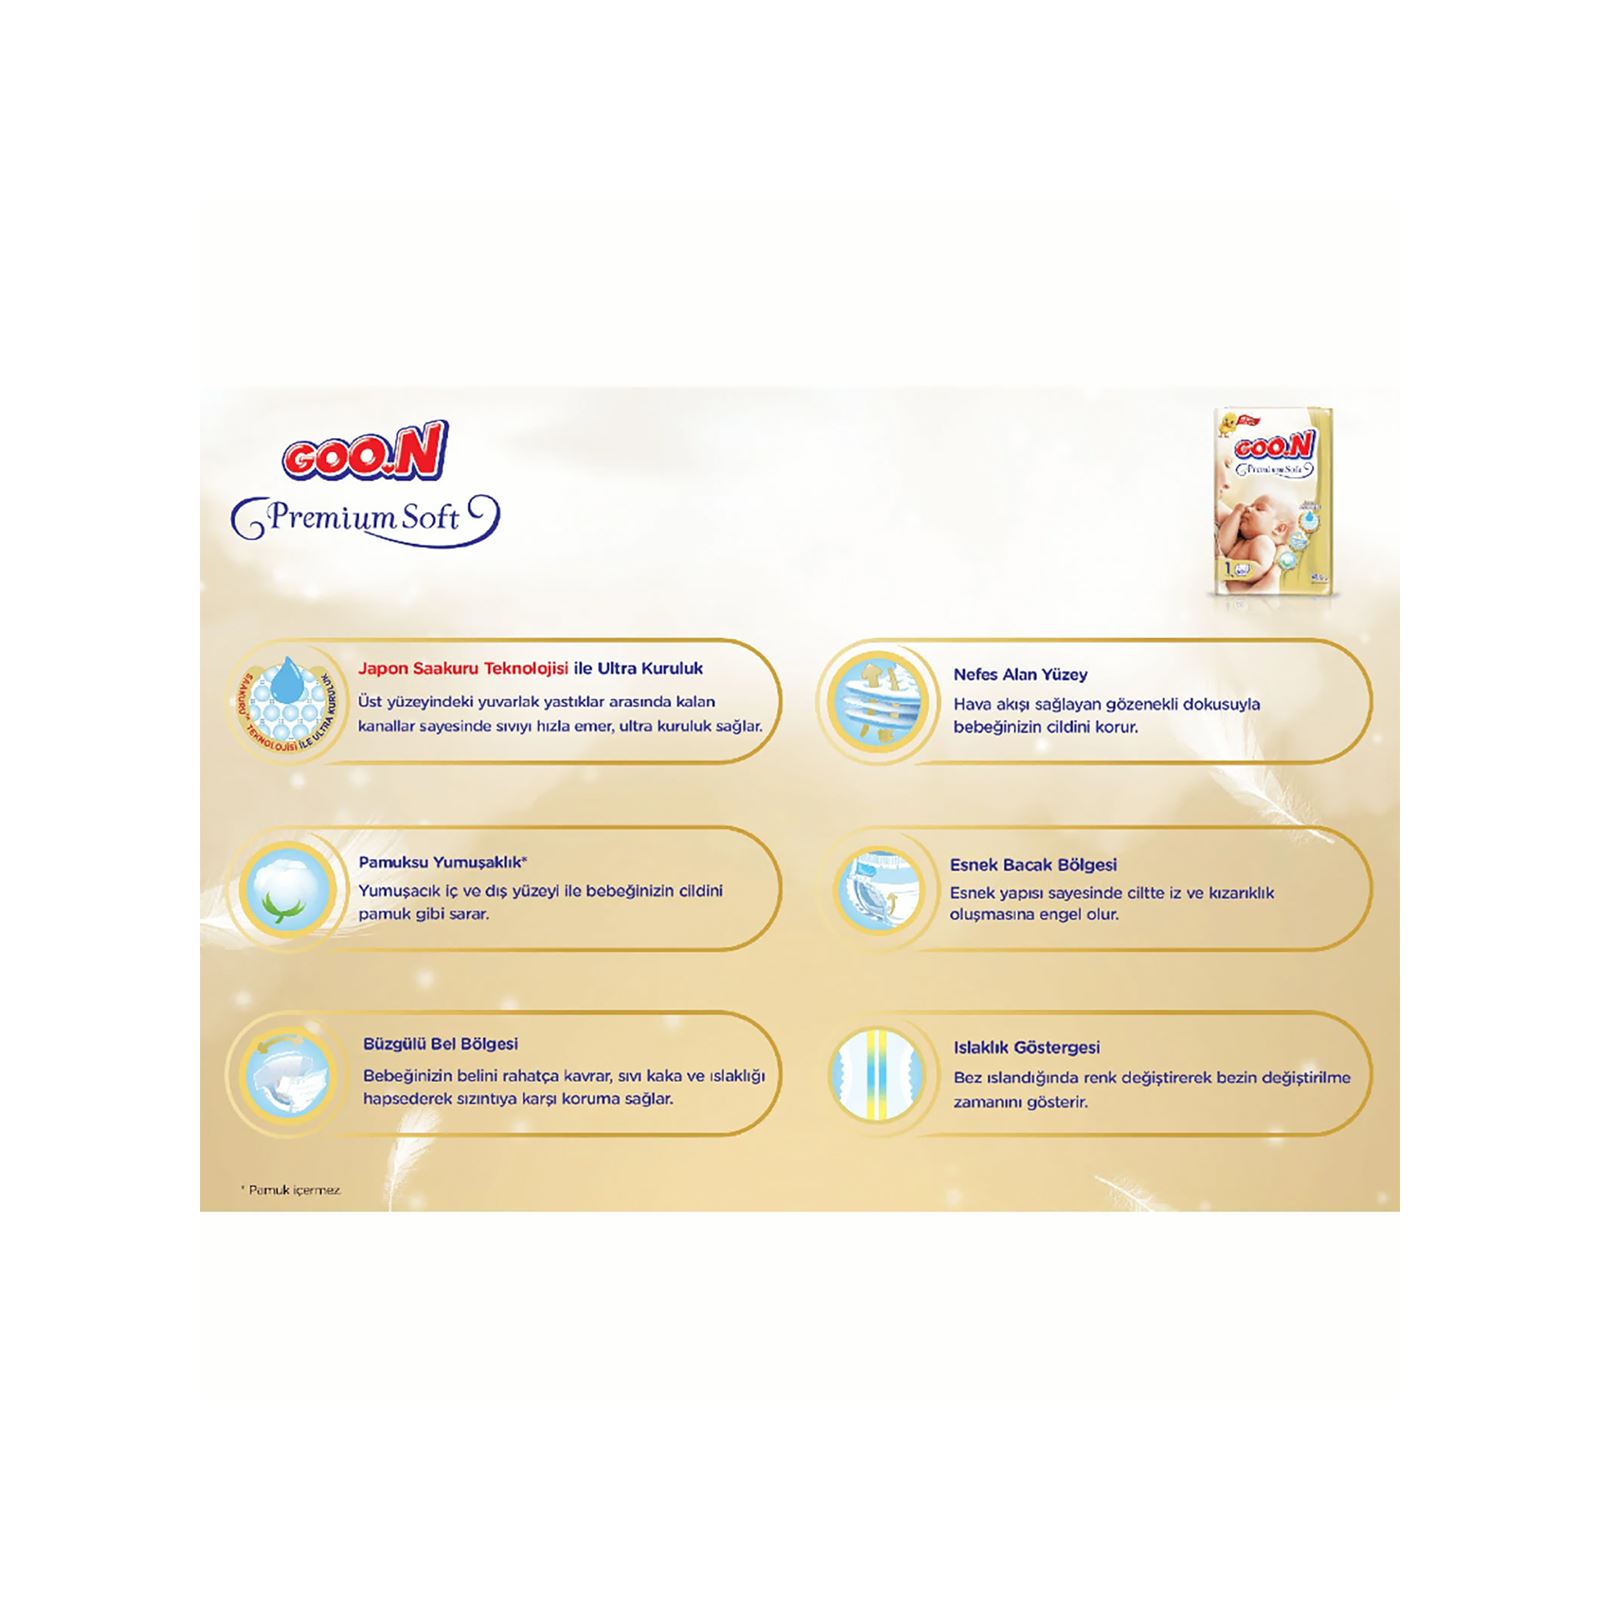 Goon Bebek Bezi Premium Soft 3 Beden Fırsat Paketi 76 Adet 7-12 kg